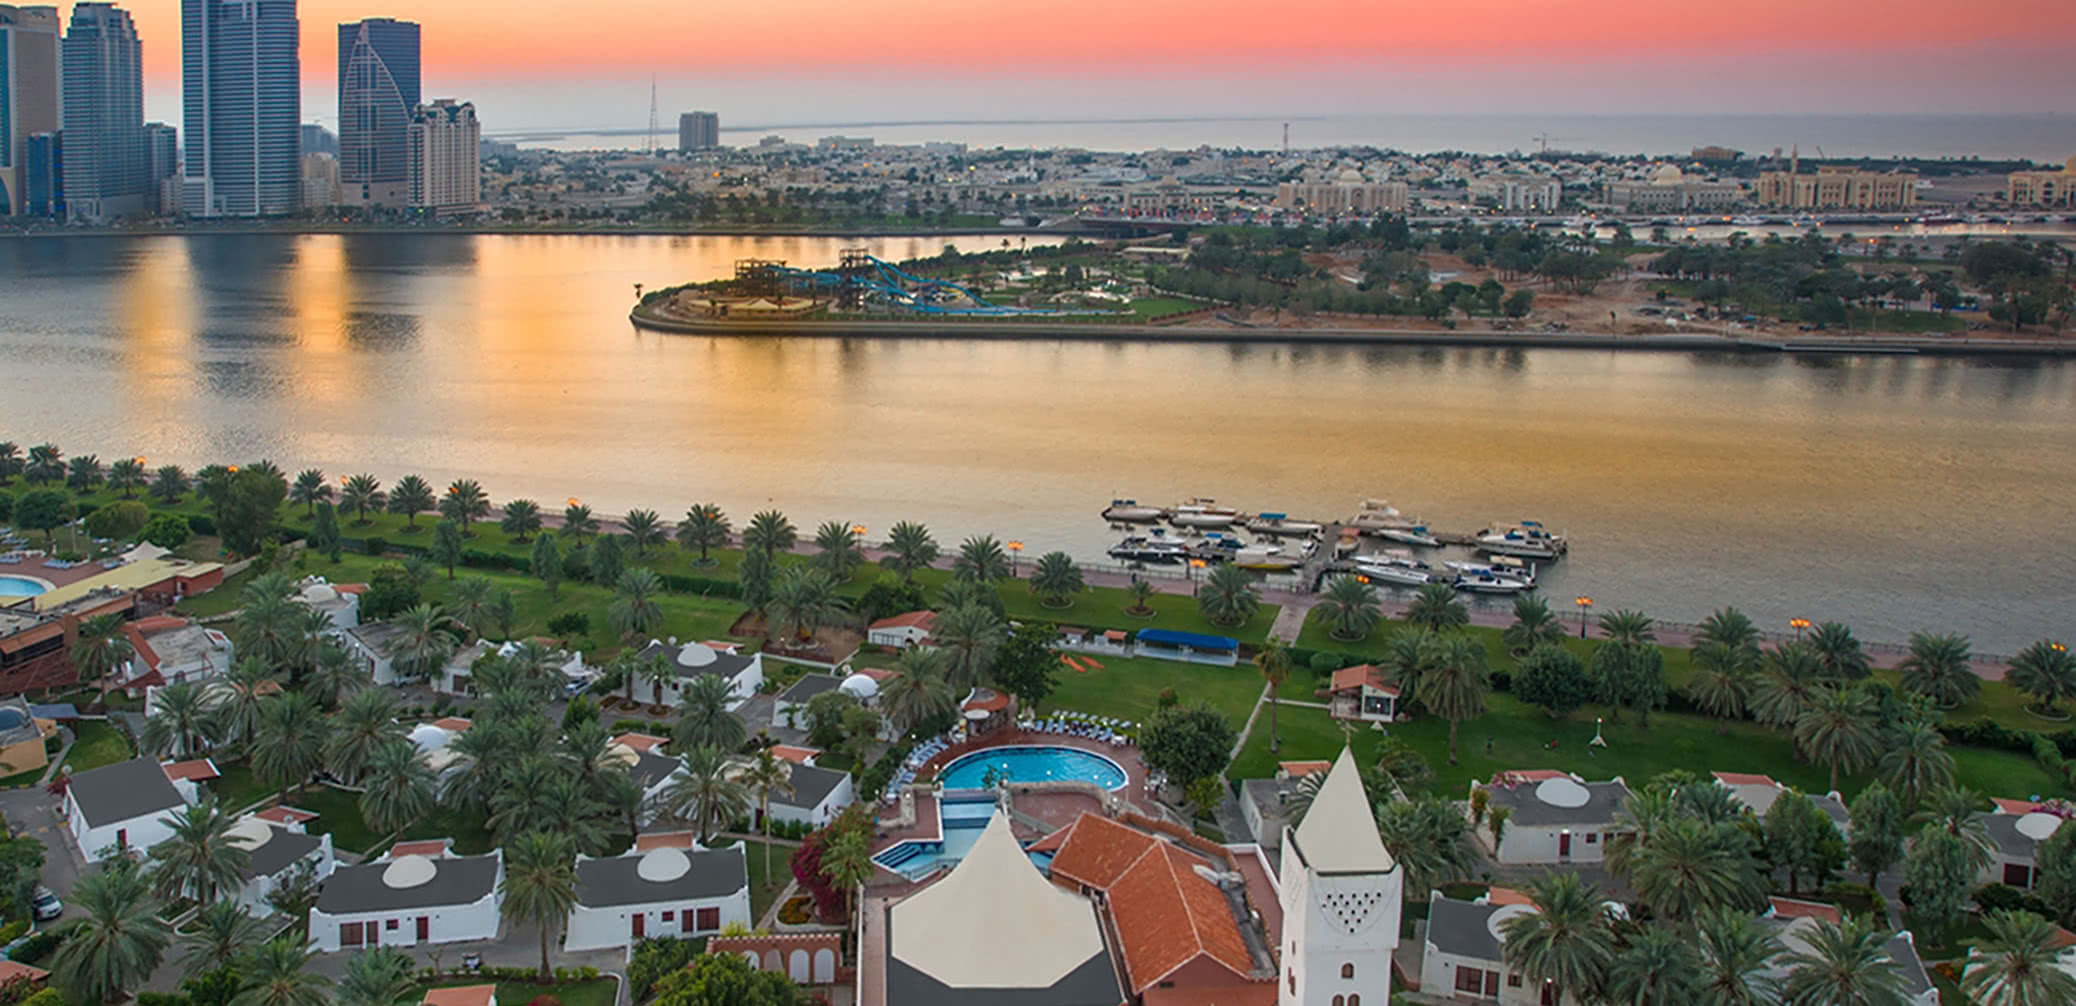 Review: Marbella Resort, Sharjah